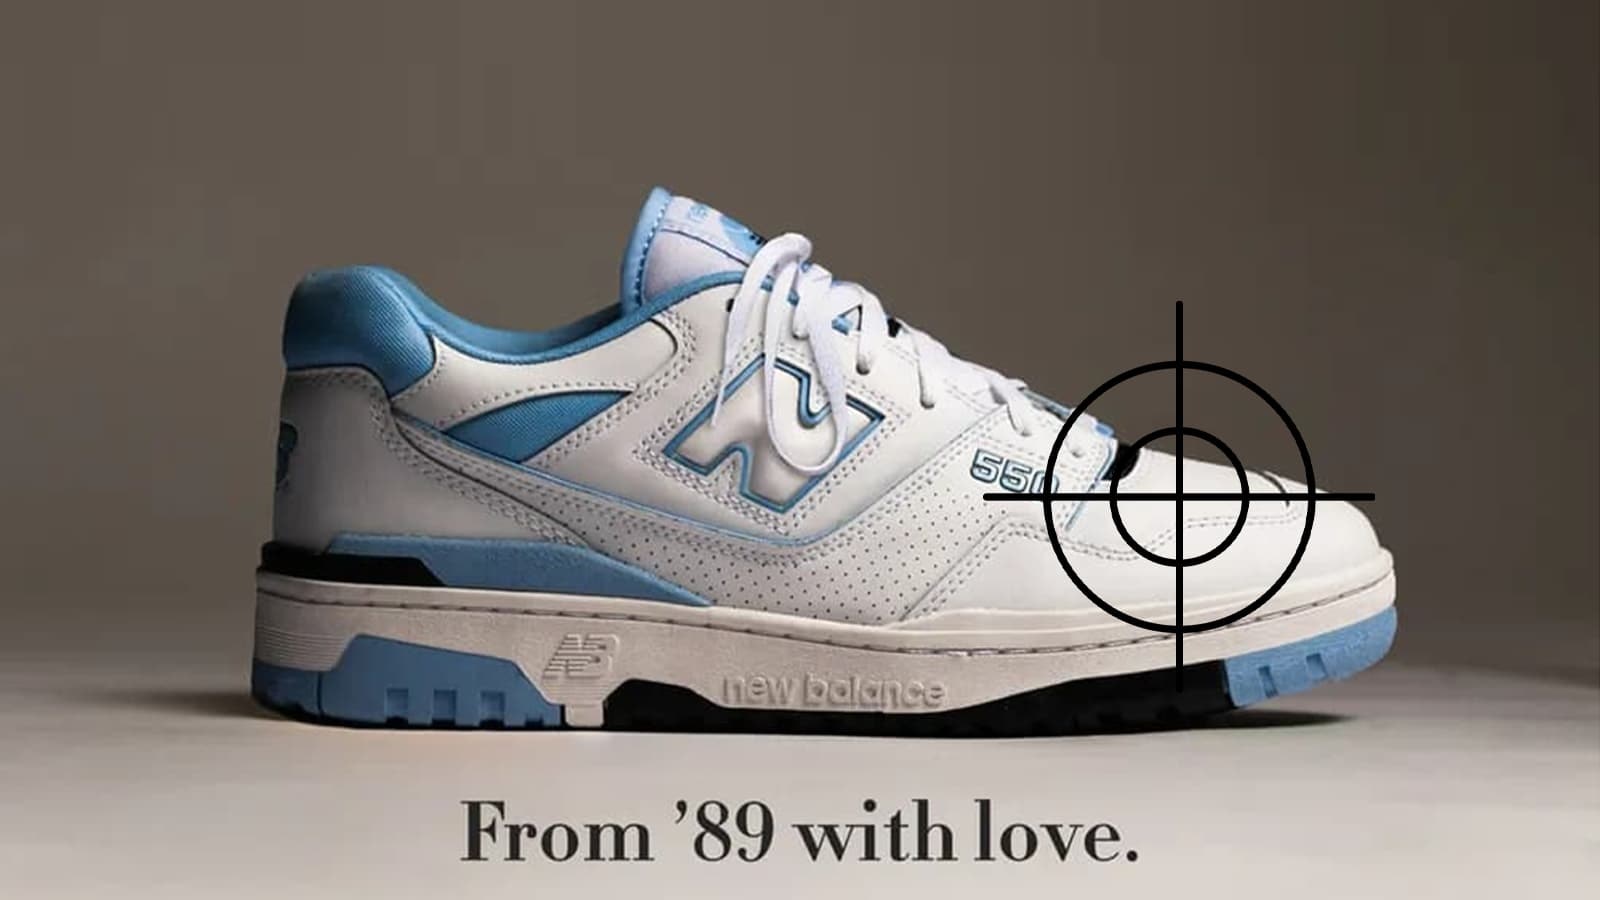 Sneaker Target: New Balance 550 "UNC"